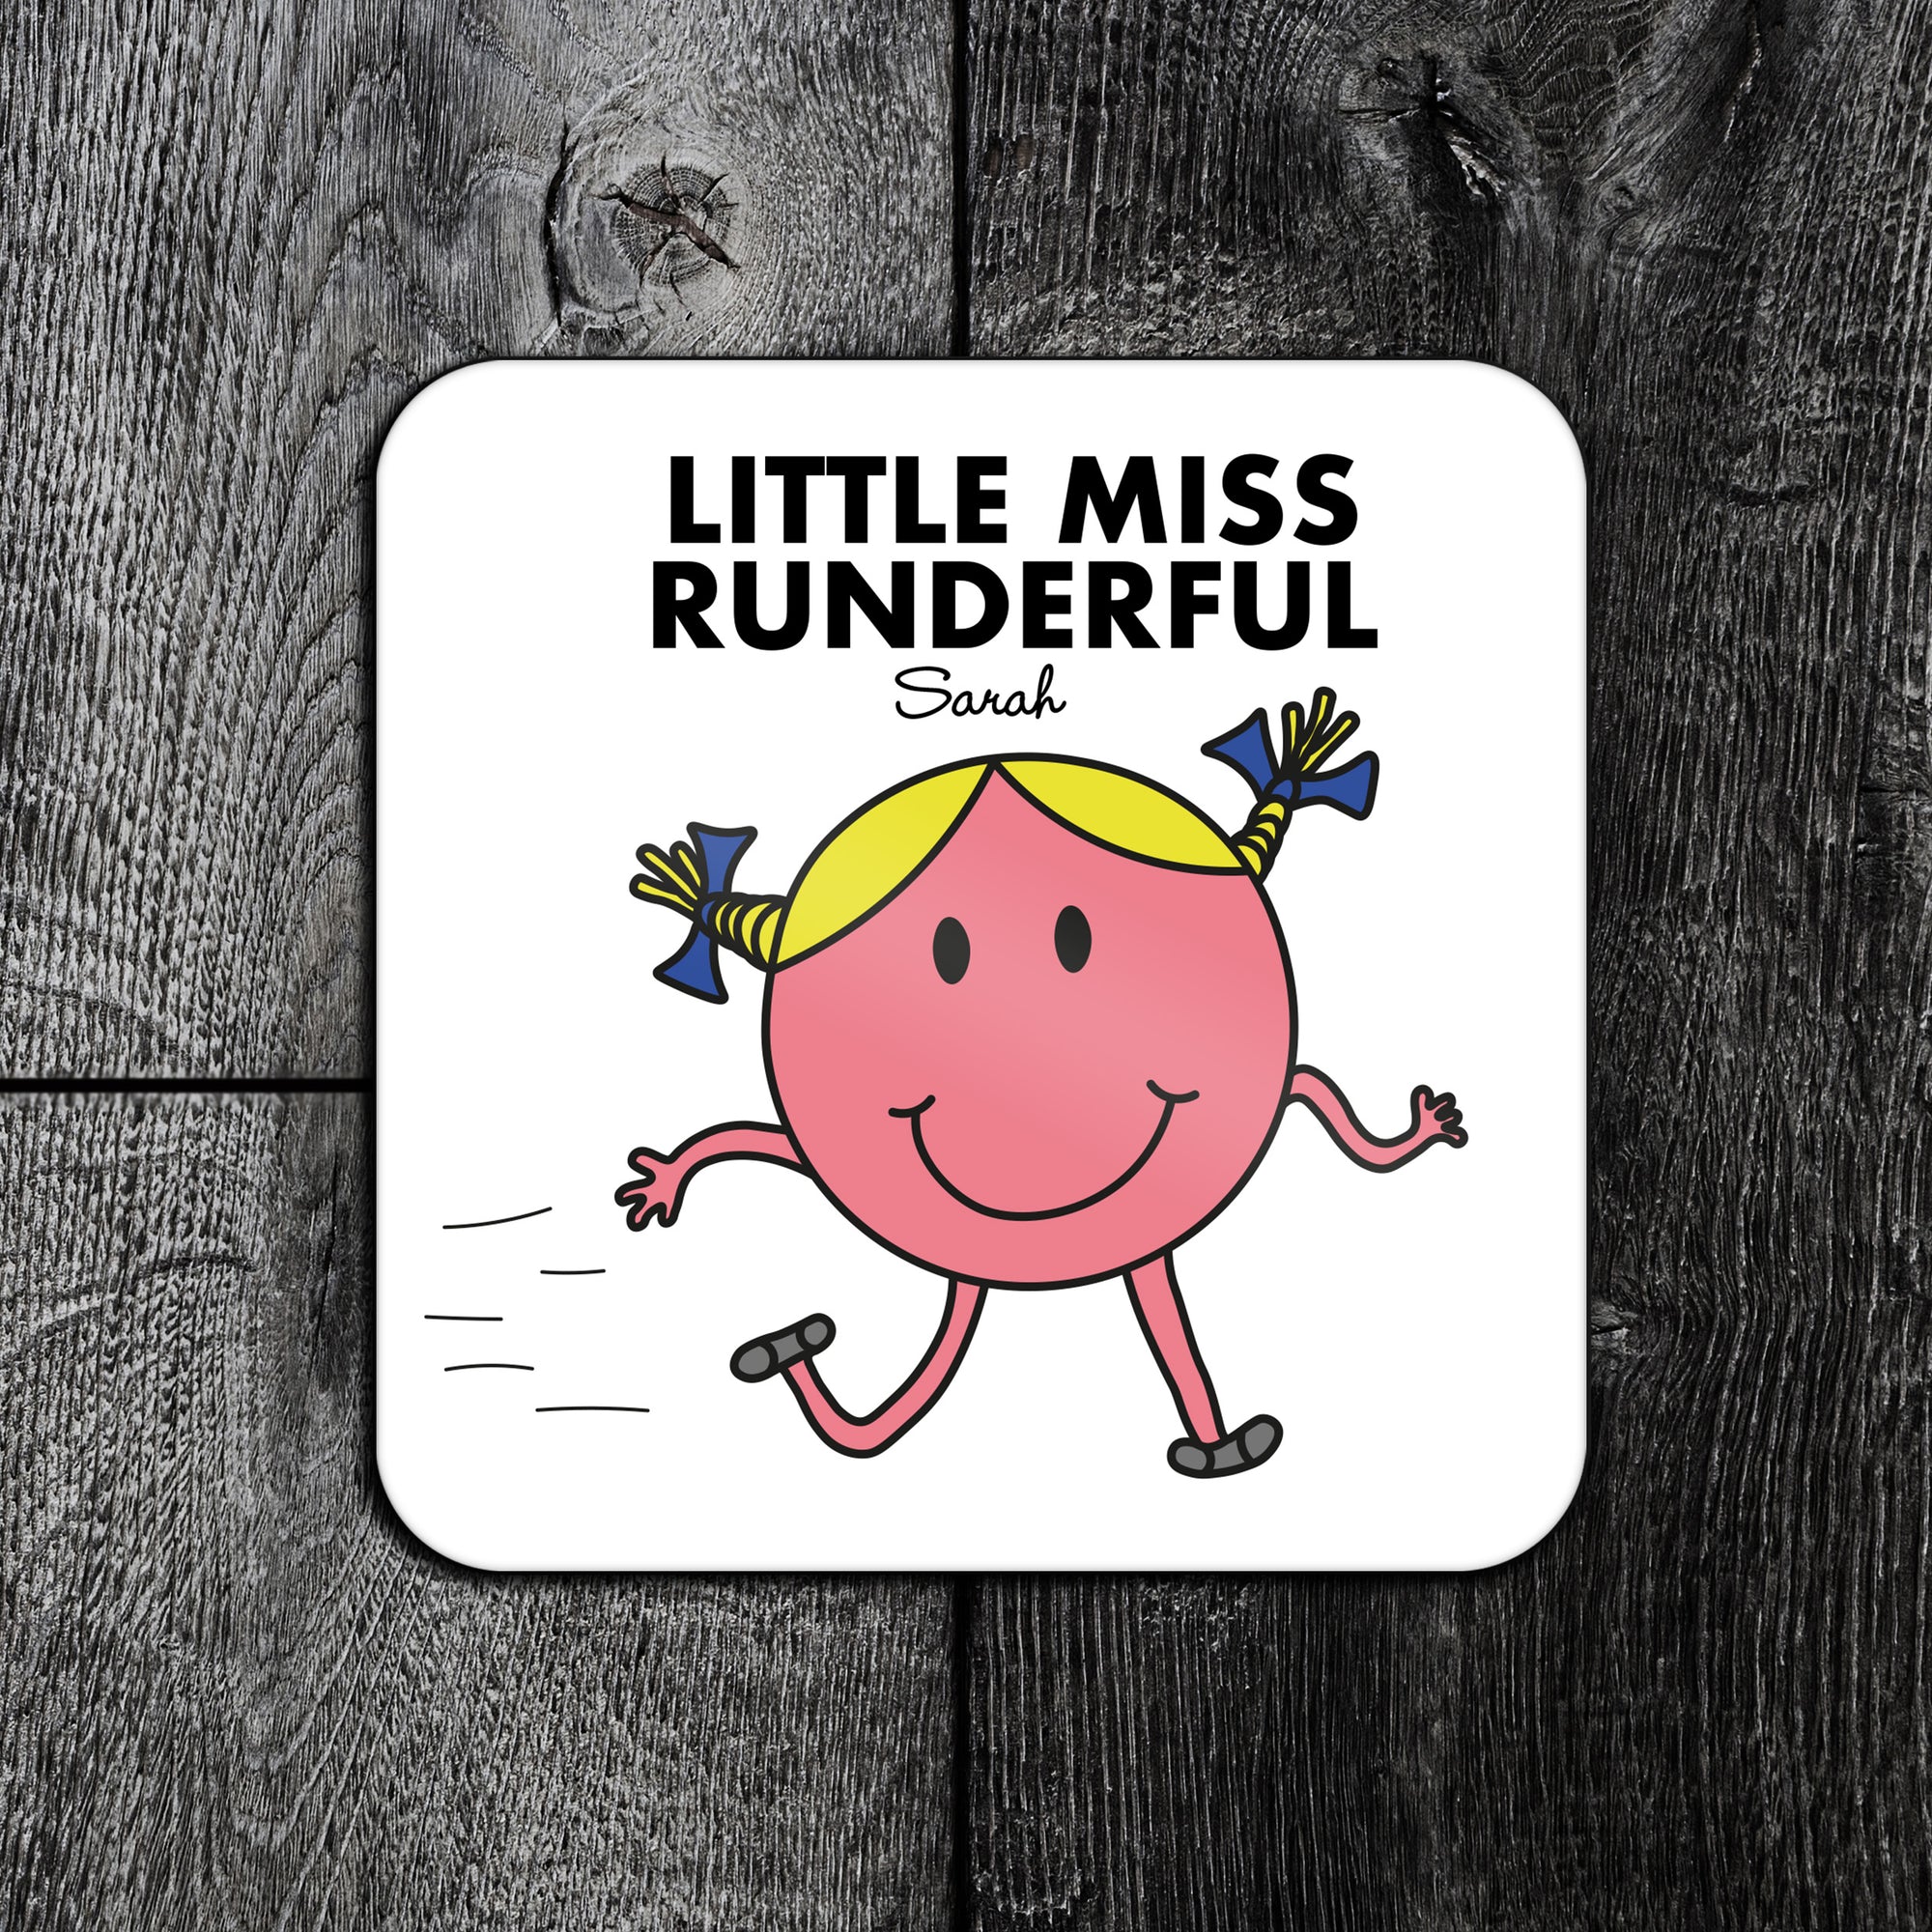 Little Miss Runderful Personalised Runner Coaster